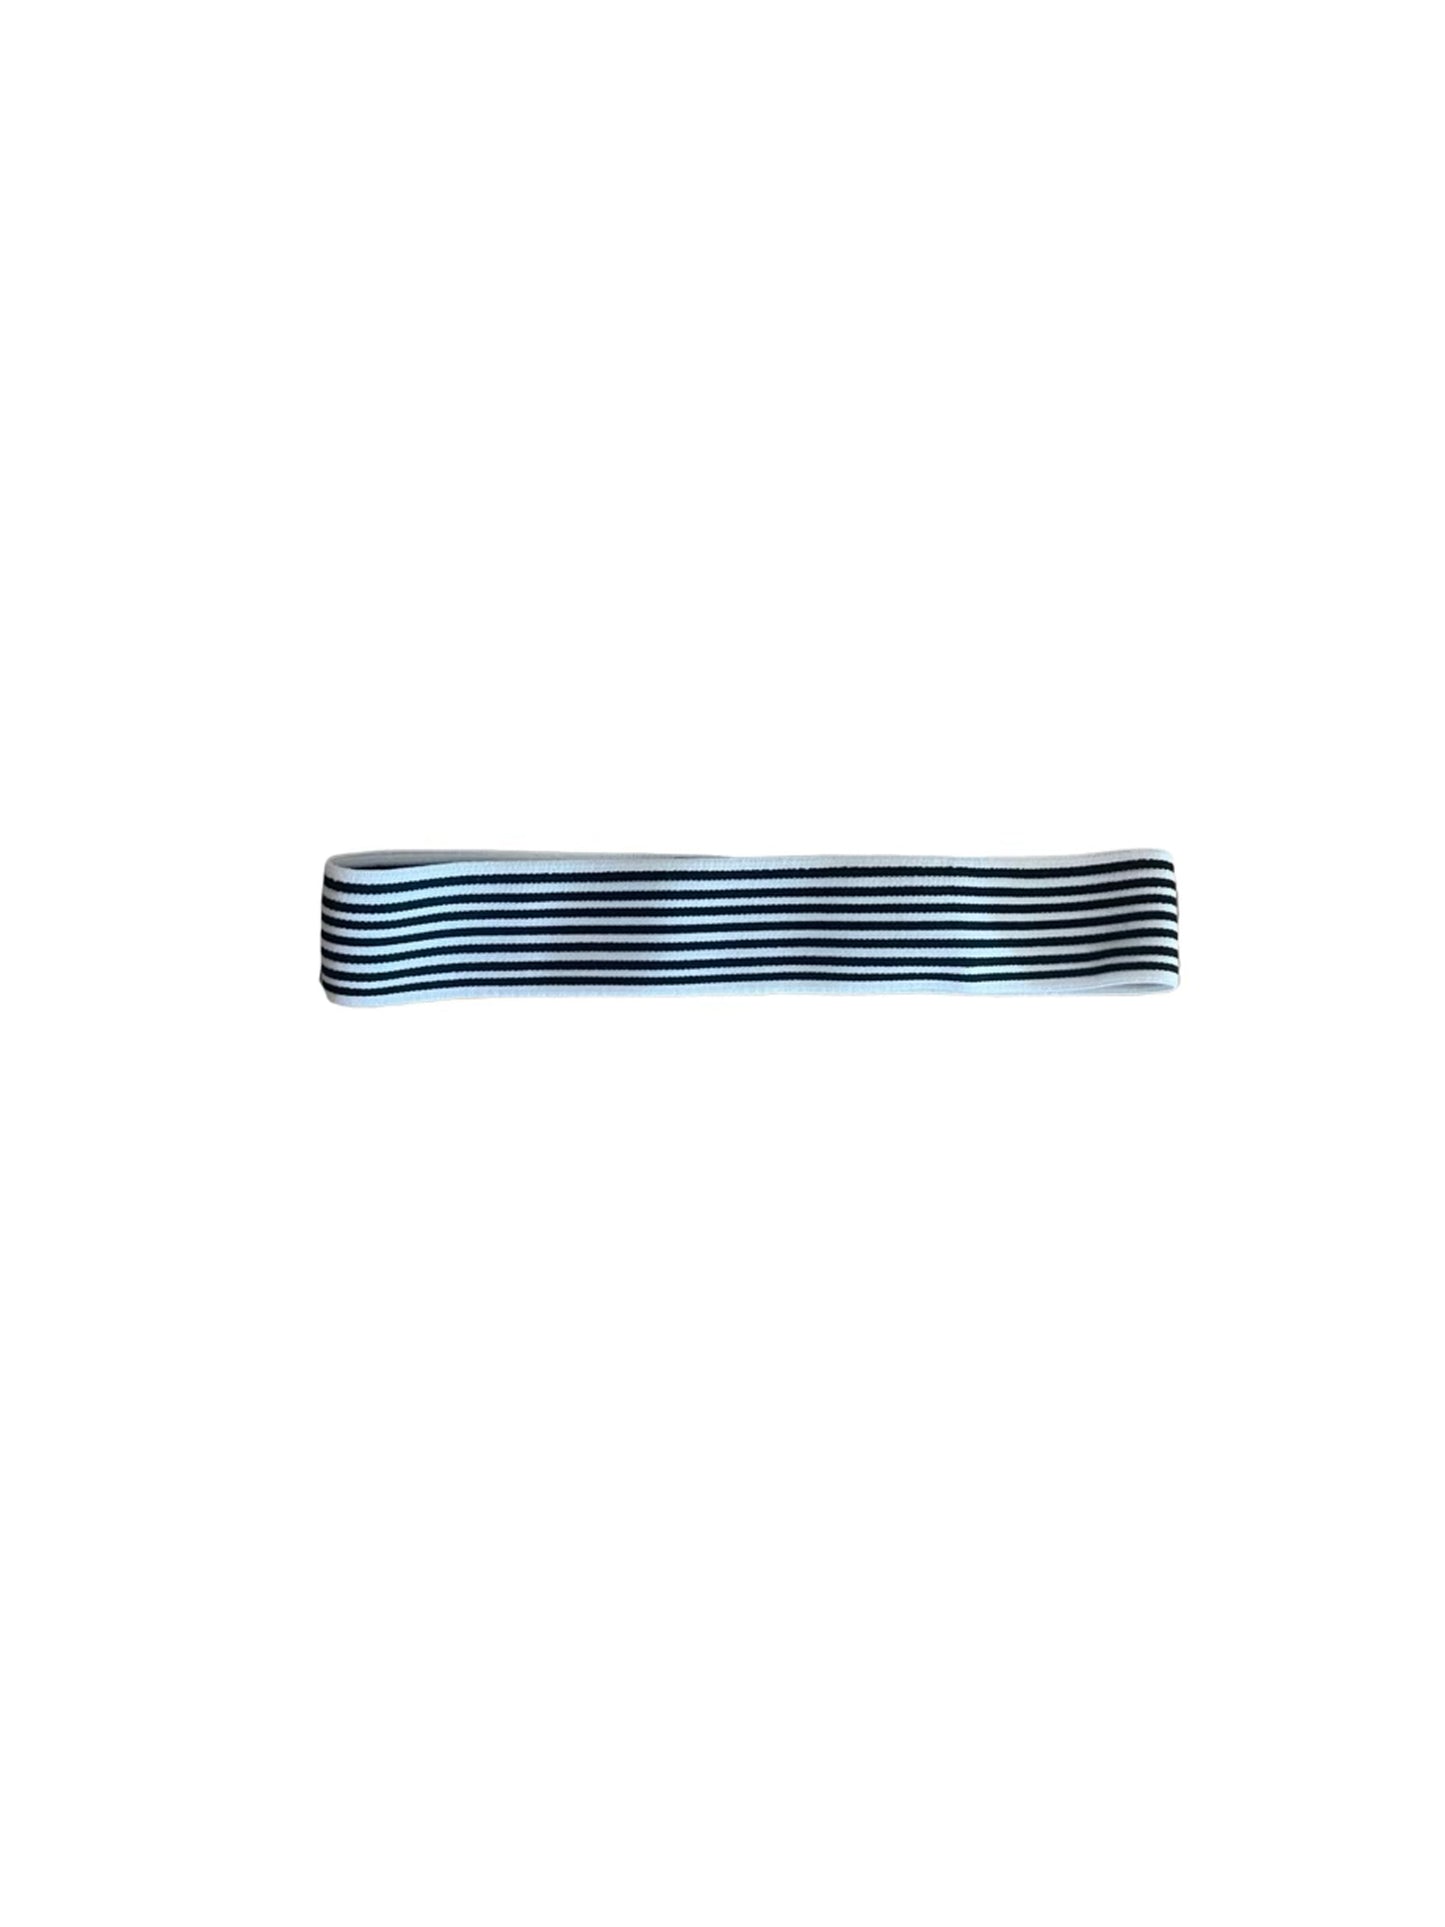 elastic hat band 1.5 inch black and white multi stripe